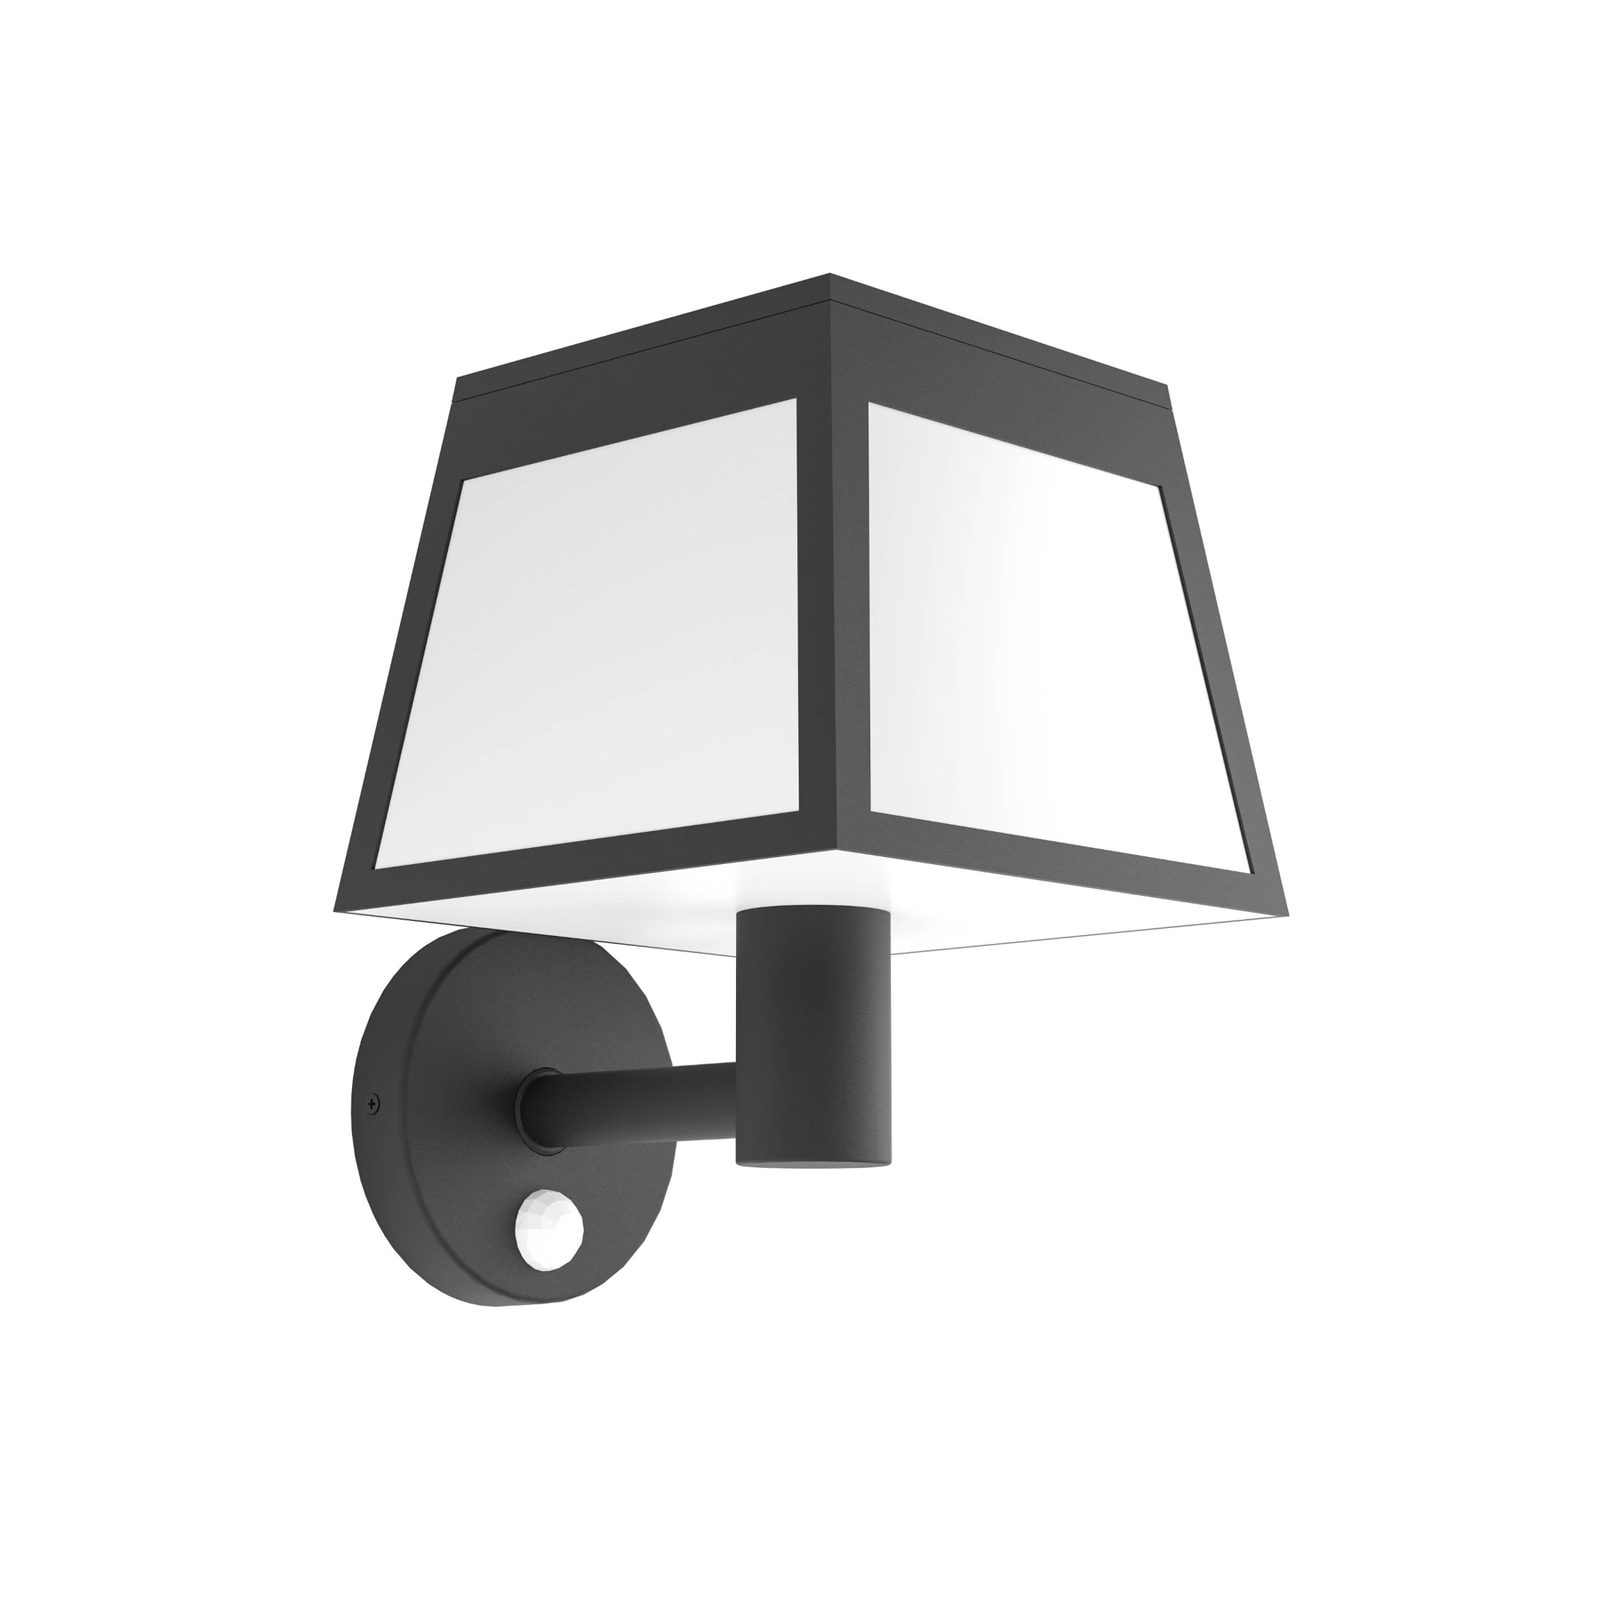 LED wandlamp Altilia, zwart, kunststof, sensor